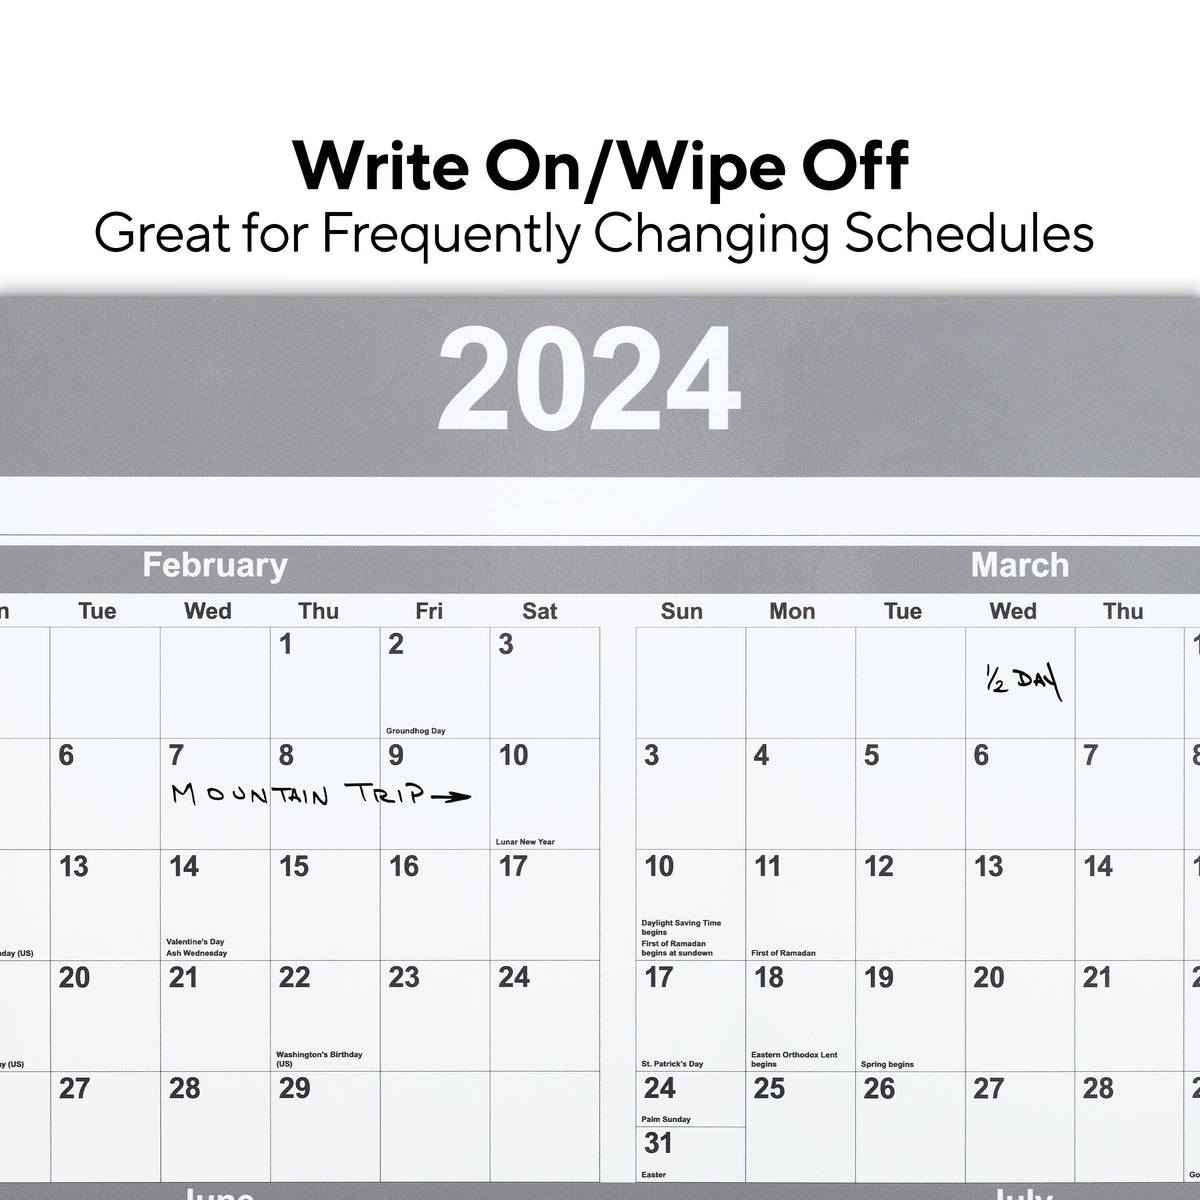 2025 Staples 48" x 32" Dry Erase Wall Calendar, Gray/White